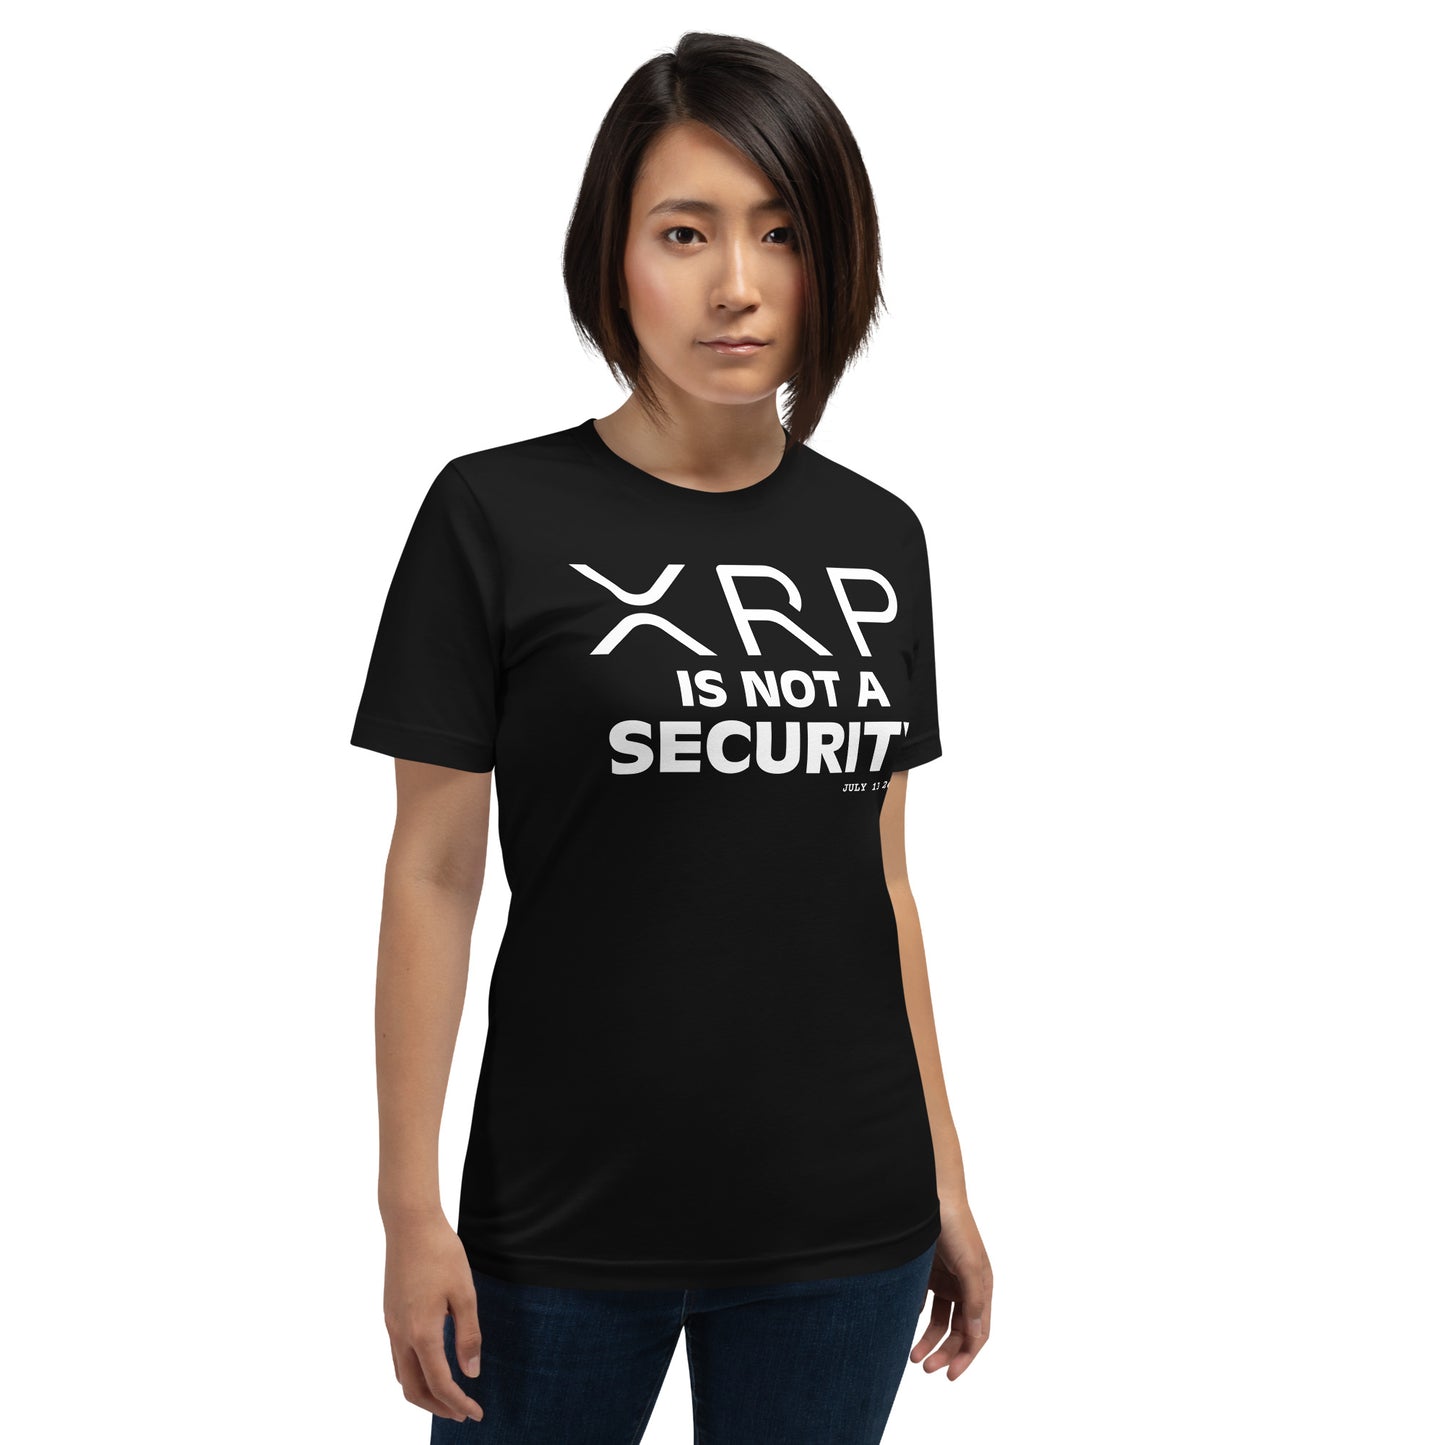 Xrp Not a Security T-Shirt